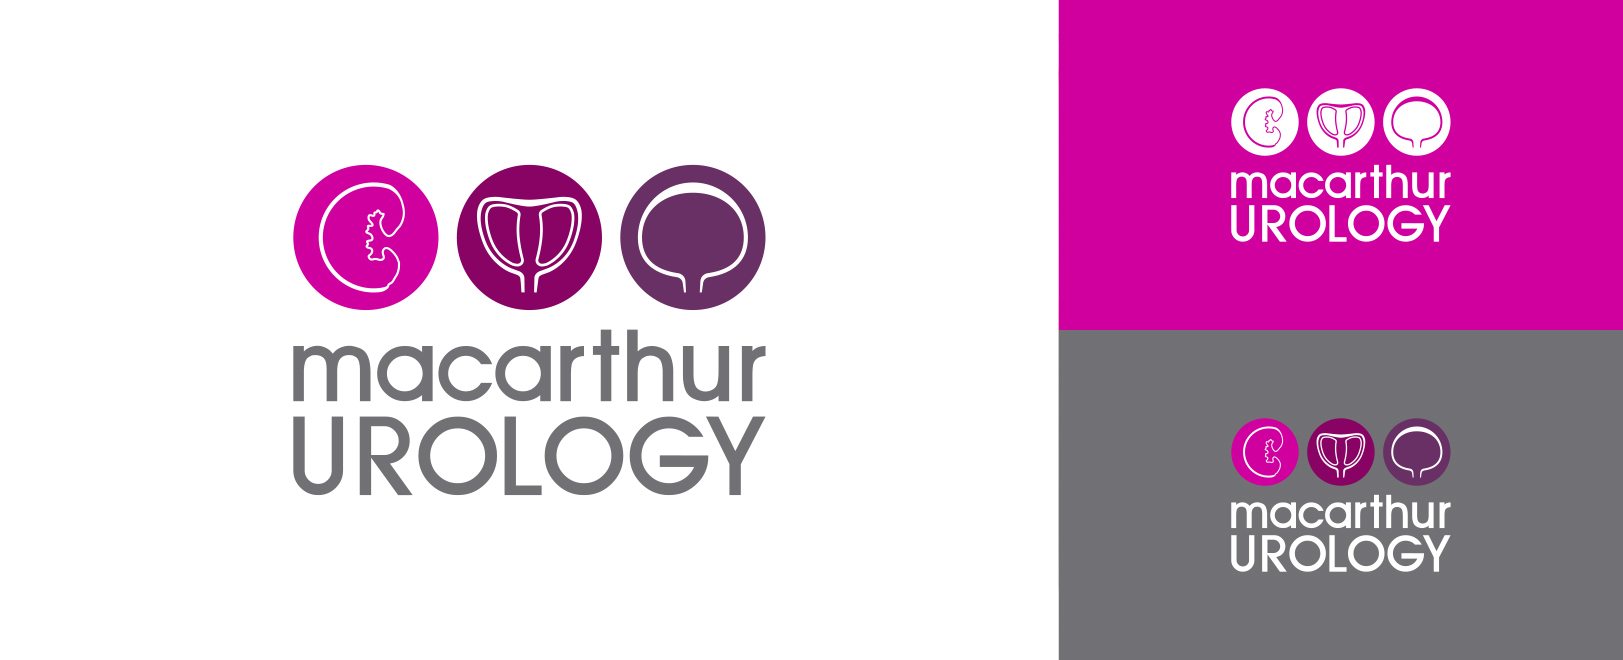 MaCarthur Urology - Brand Design - Cronulla Web Design